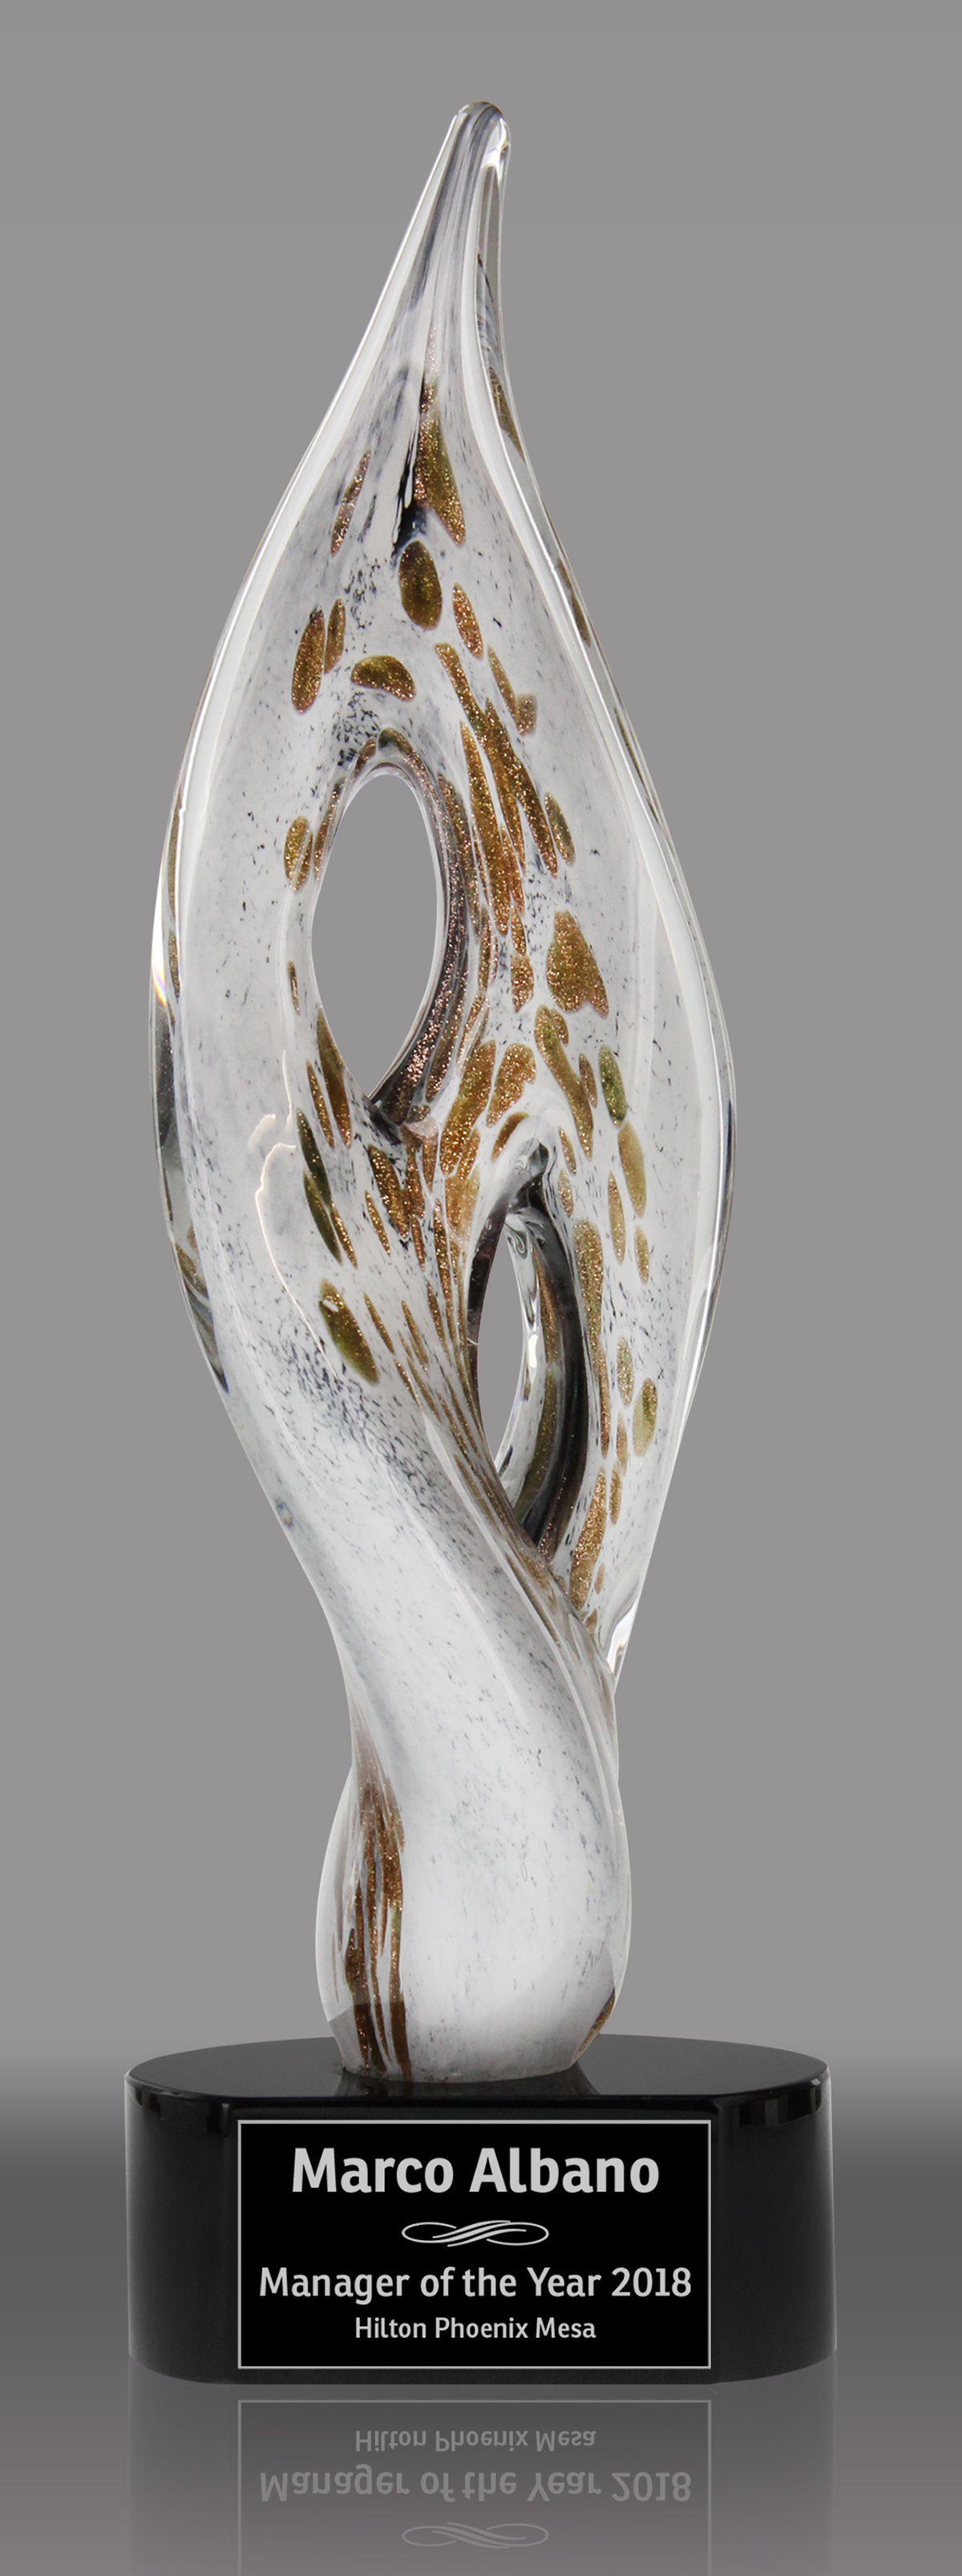 Twisted Infinity Glass Award